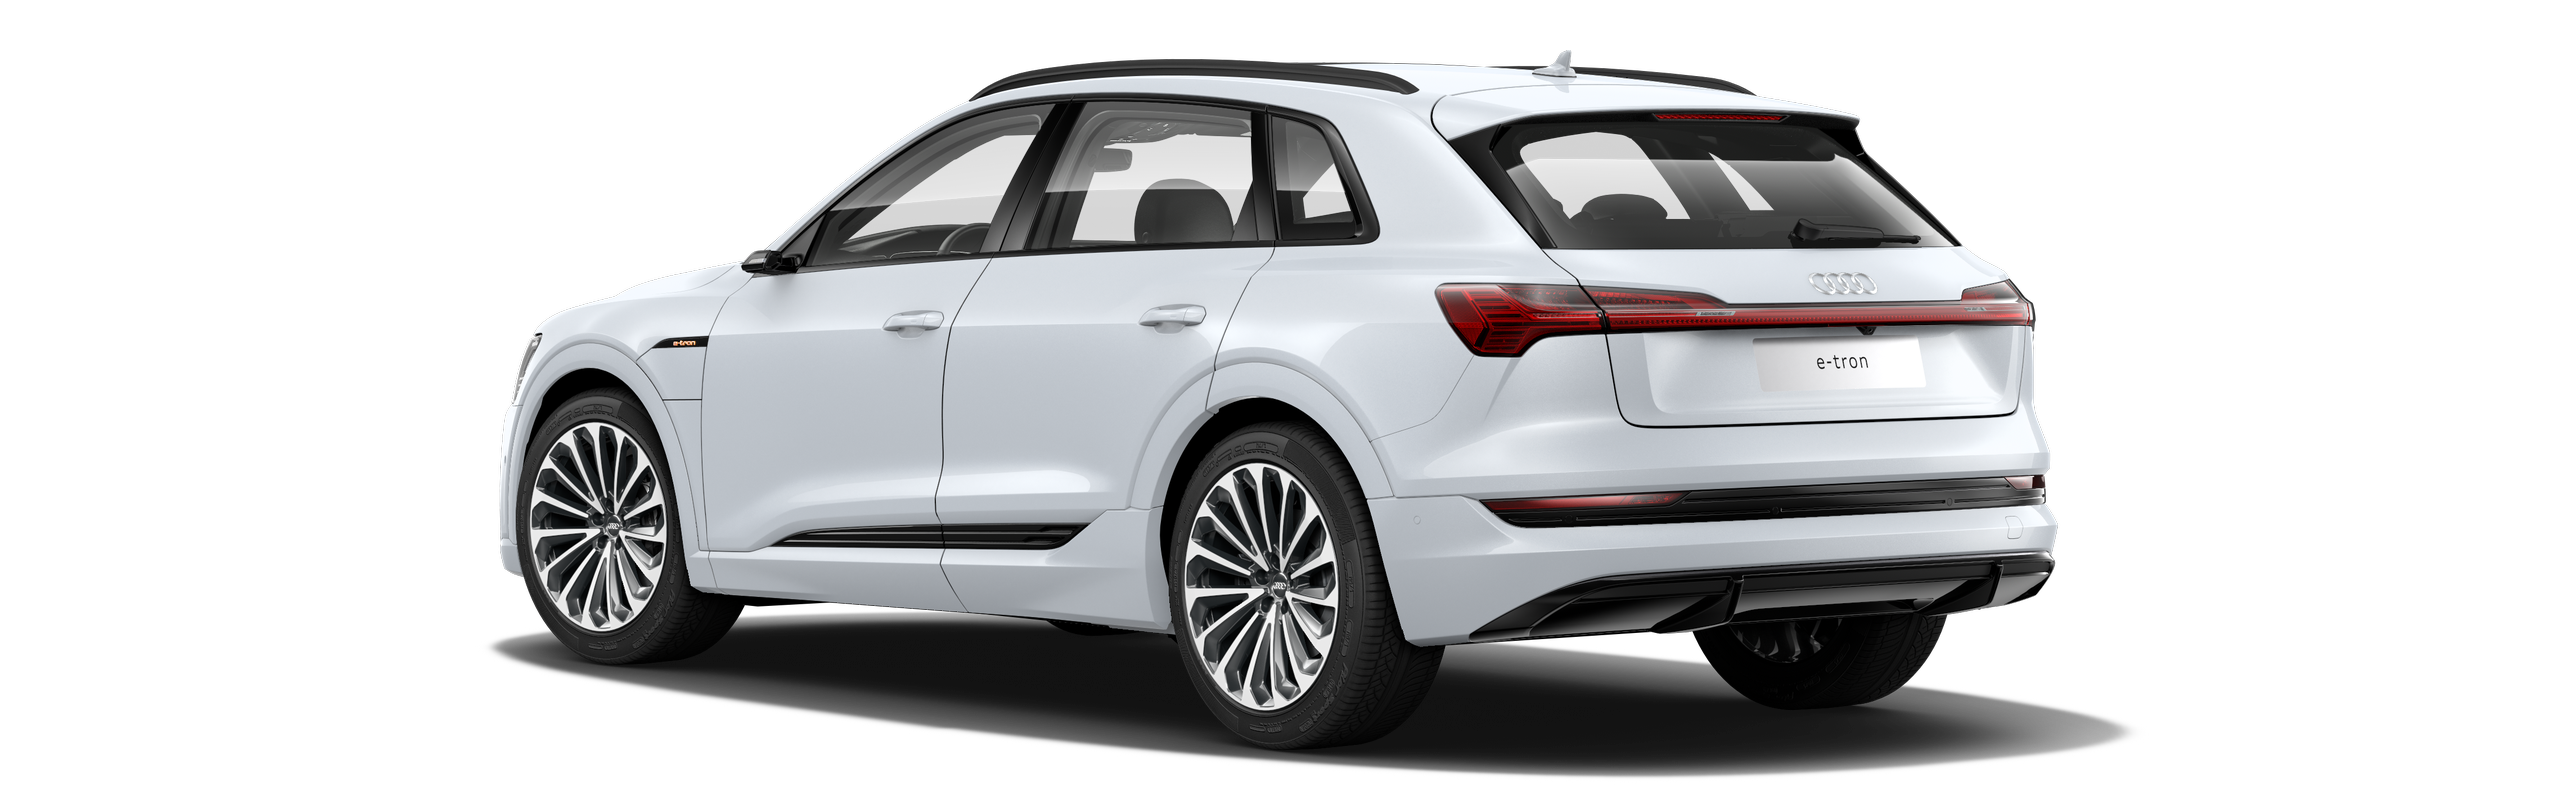 Audi e-tron | elektromobil | prvni elektricke auto | skladem | objednani online | nejvýhodněji